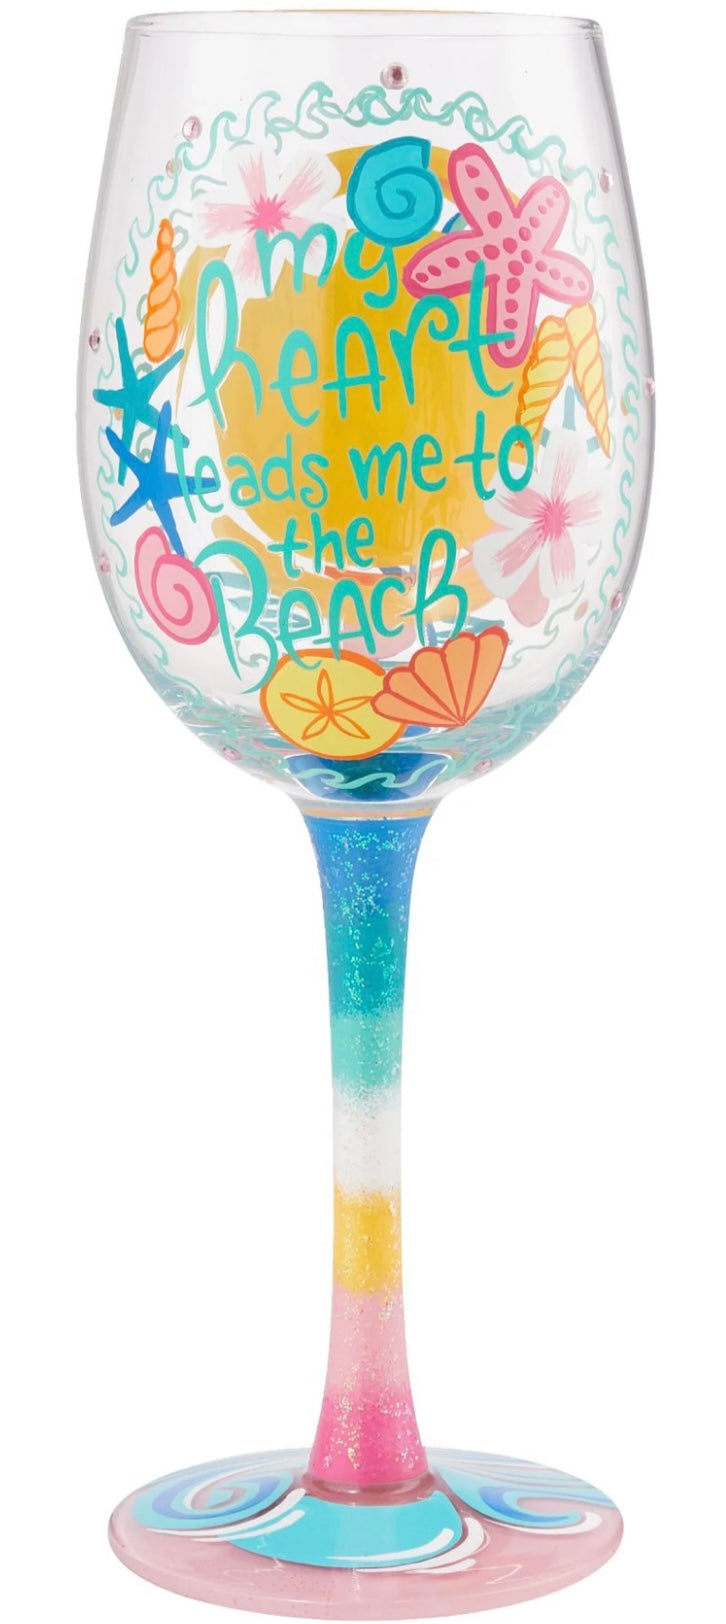 Beach Life Lolita Wine Glass